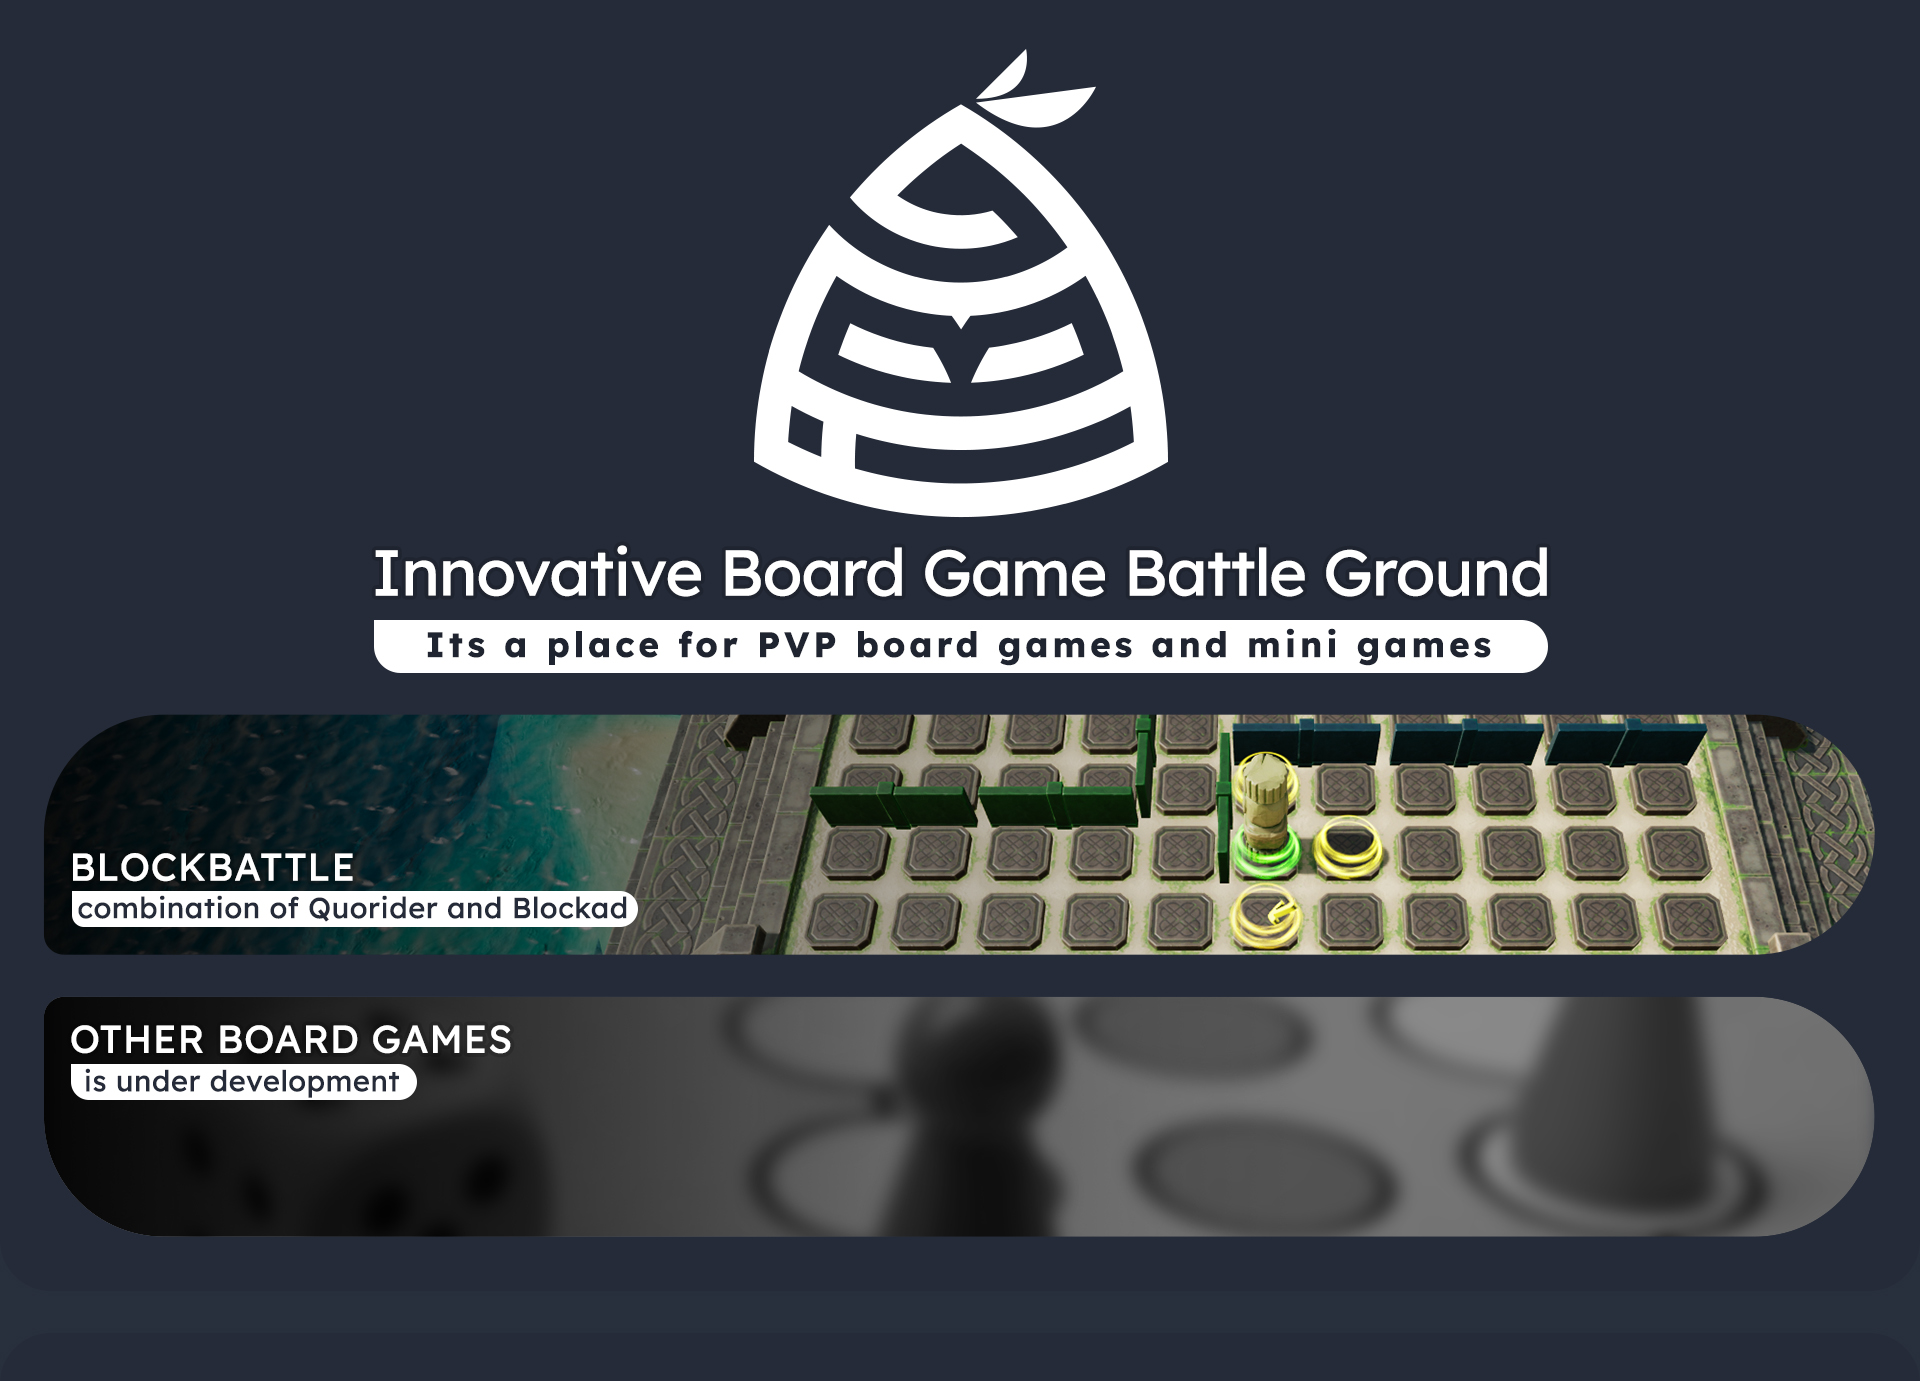 IBG2-Innovative Board Game Battle Ground